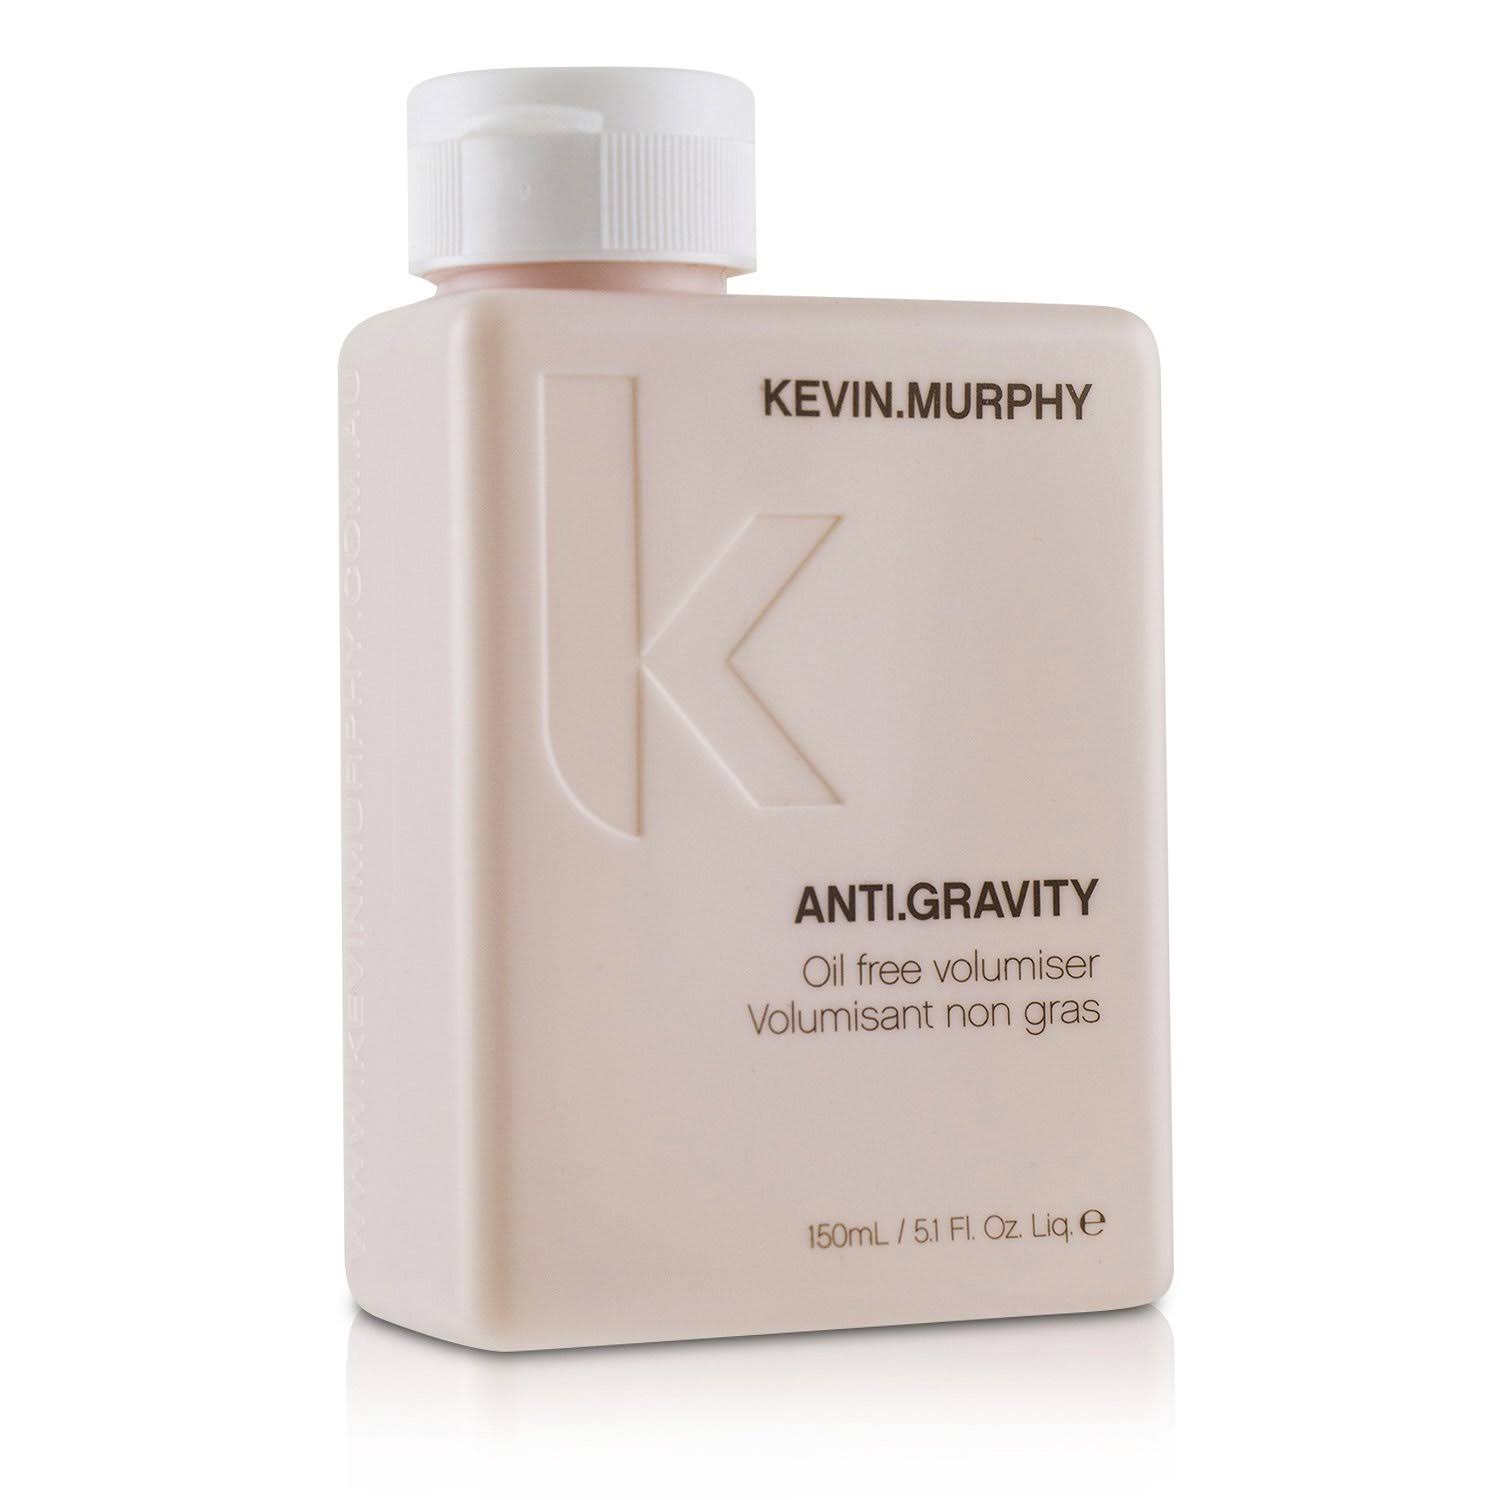 Kevin Murphy Anti Gravity Oil Free Volumiser - 150ml